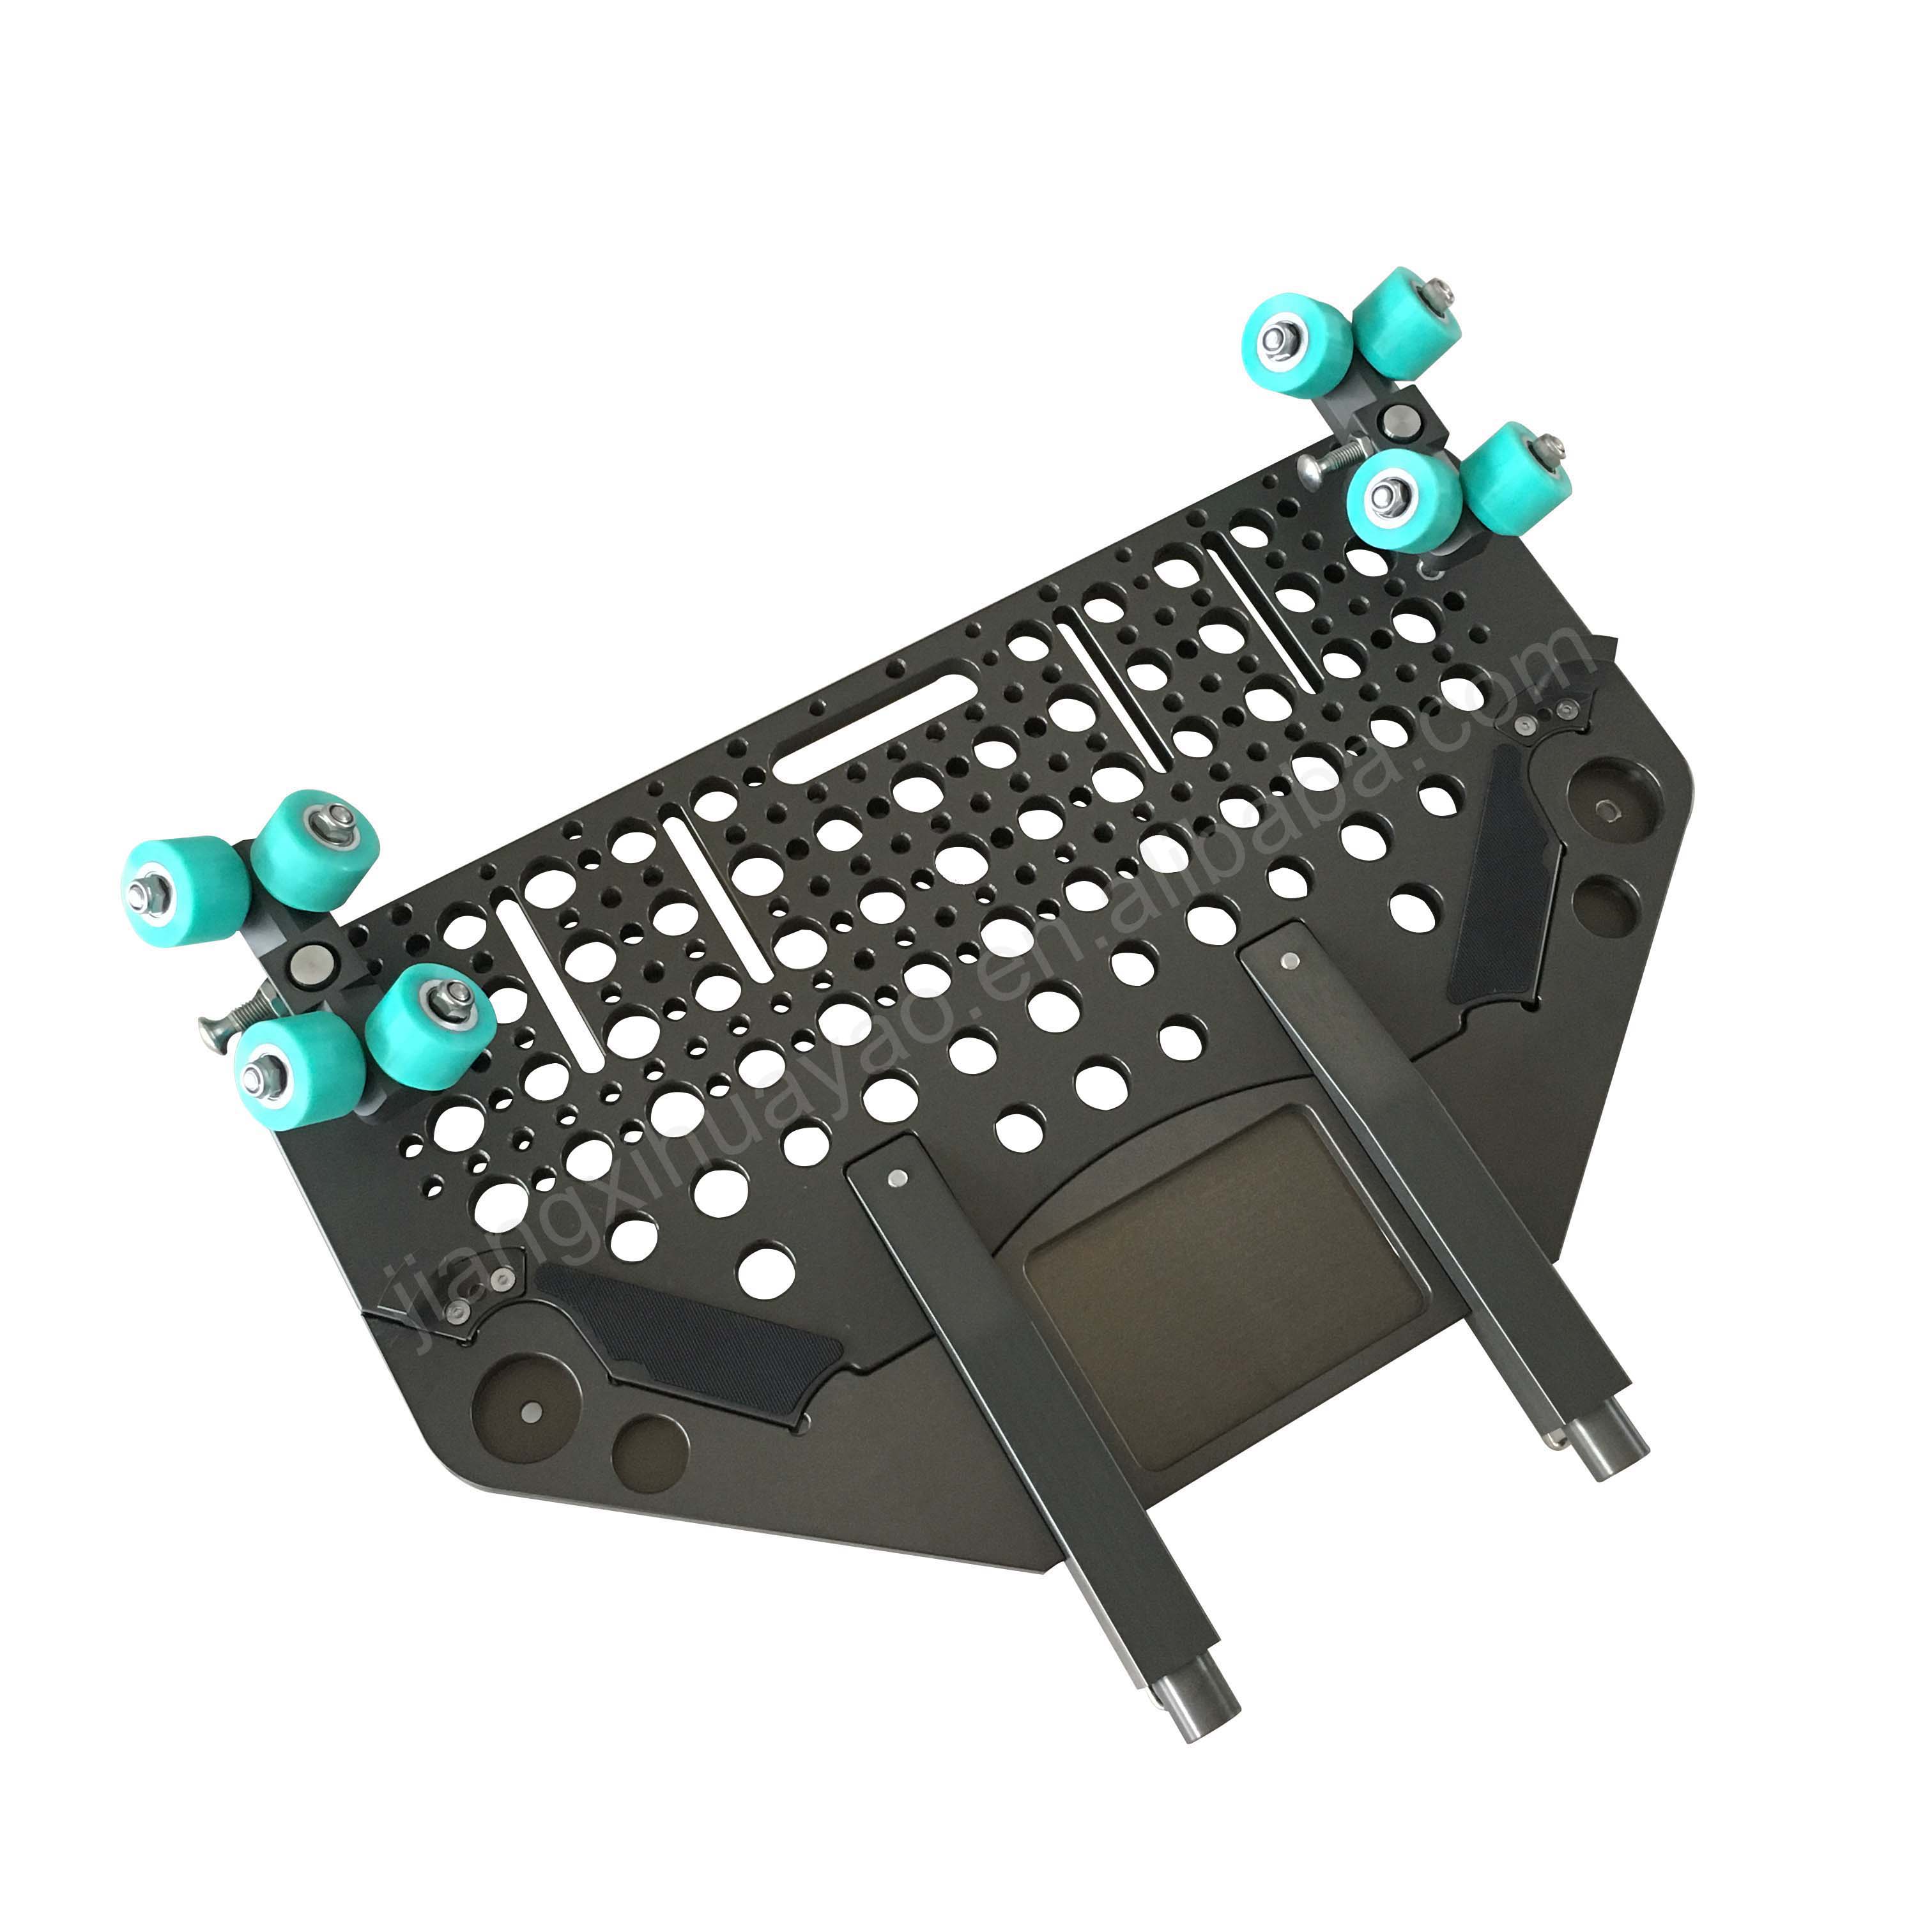 NSH Low platform system with skateboard wheels Multifunctional low platform